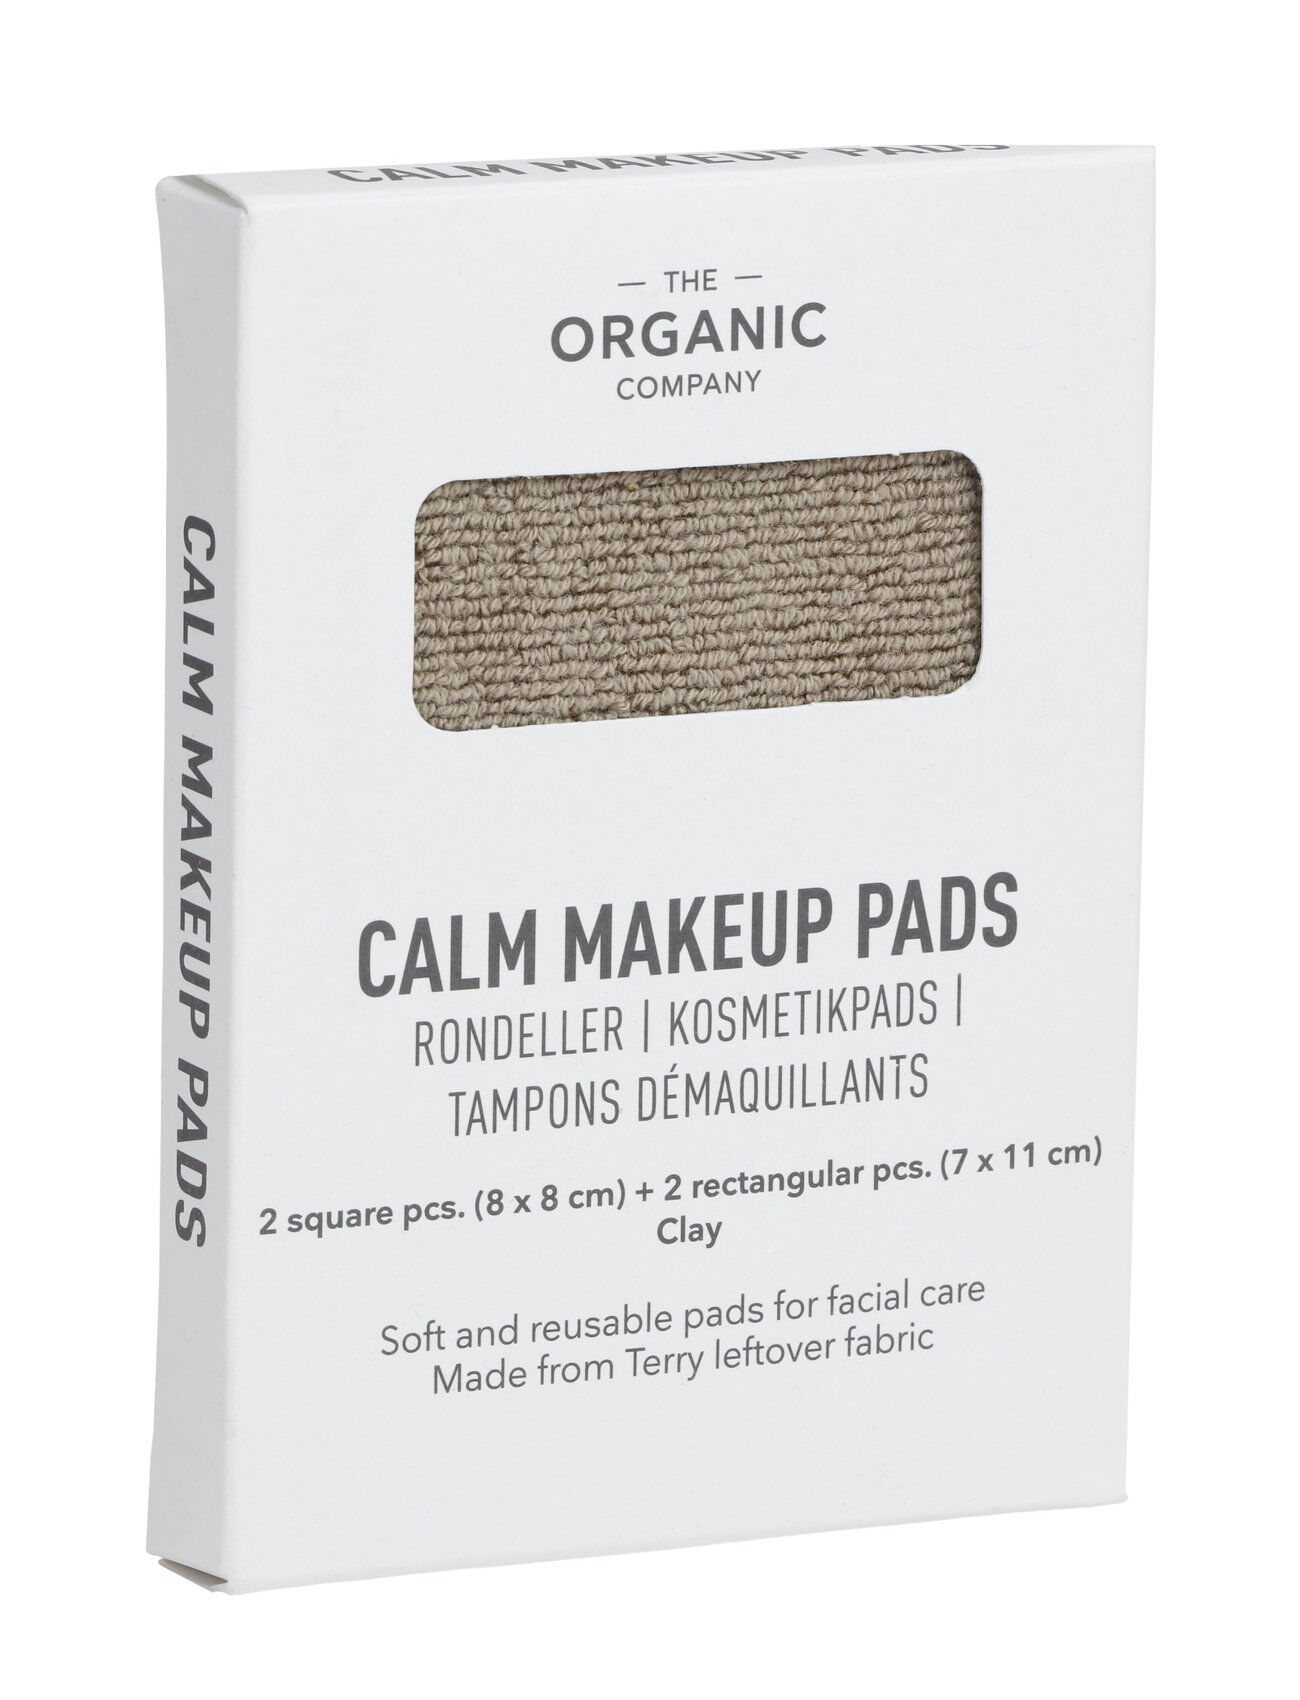 The Organic Company Calm Makeup Pads Home Bathroom Textiles Towels Beige The Organic Company